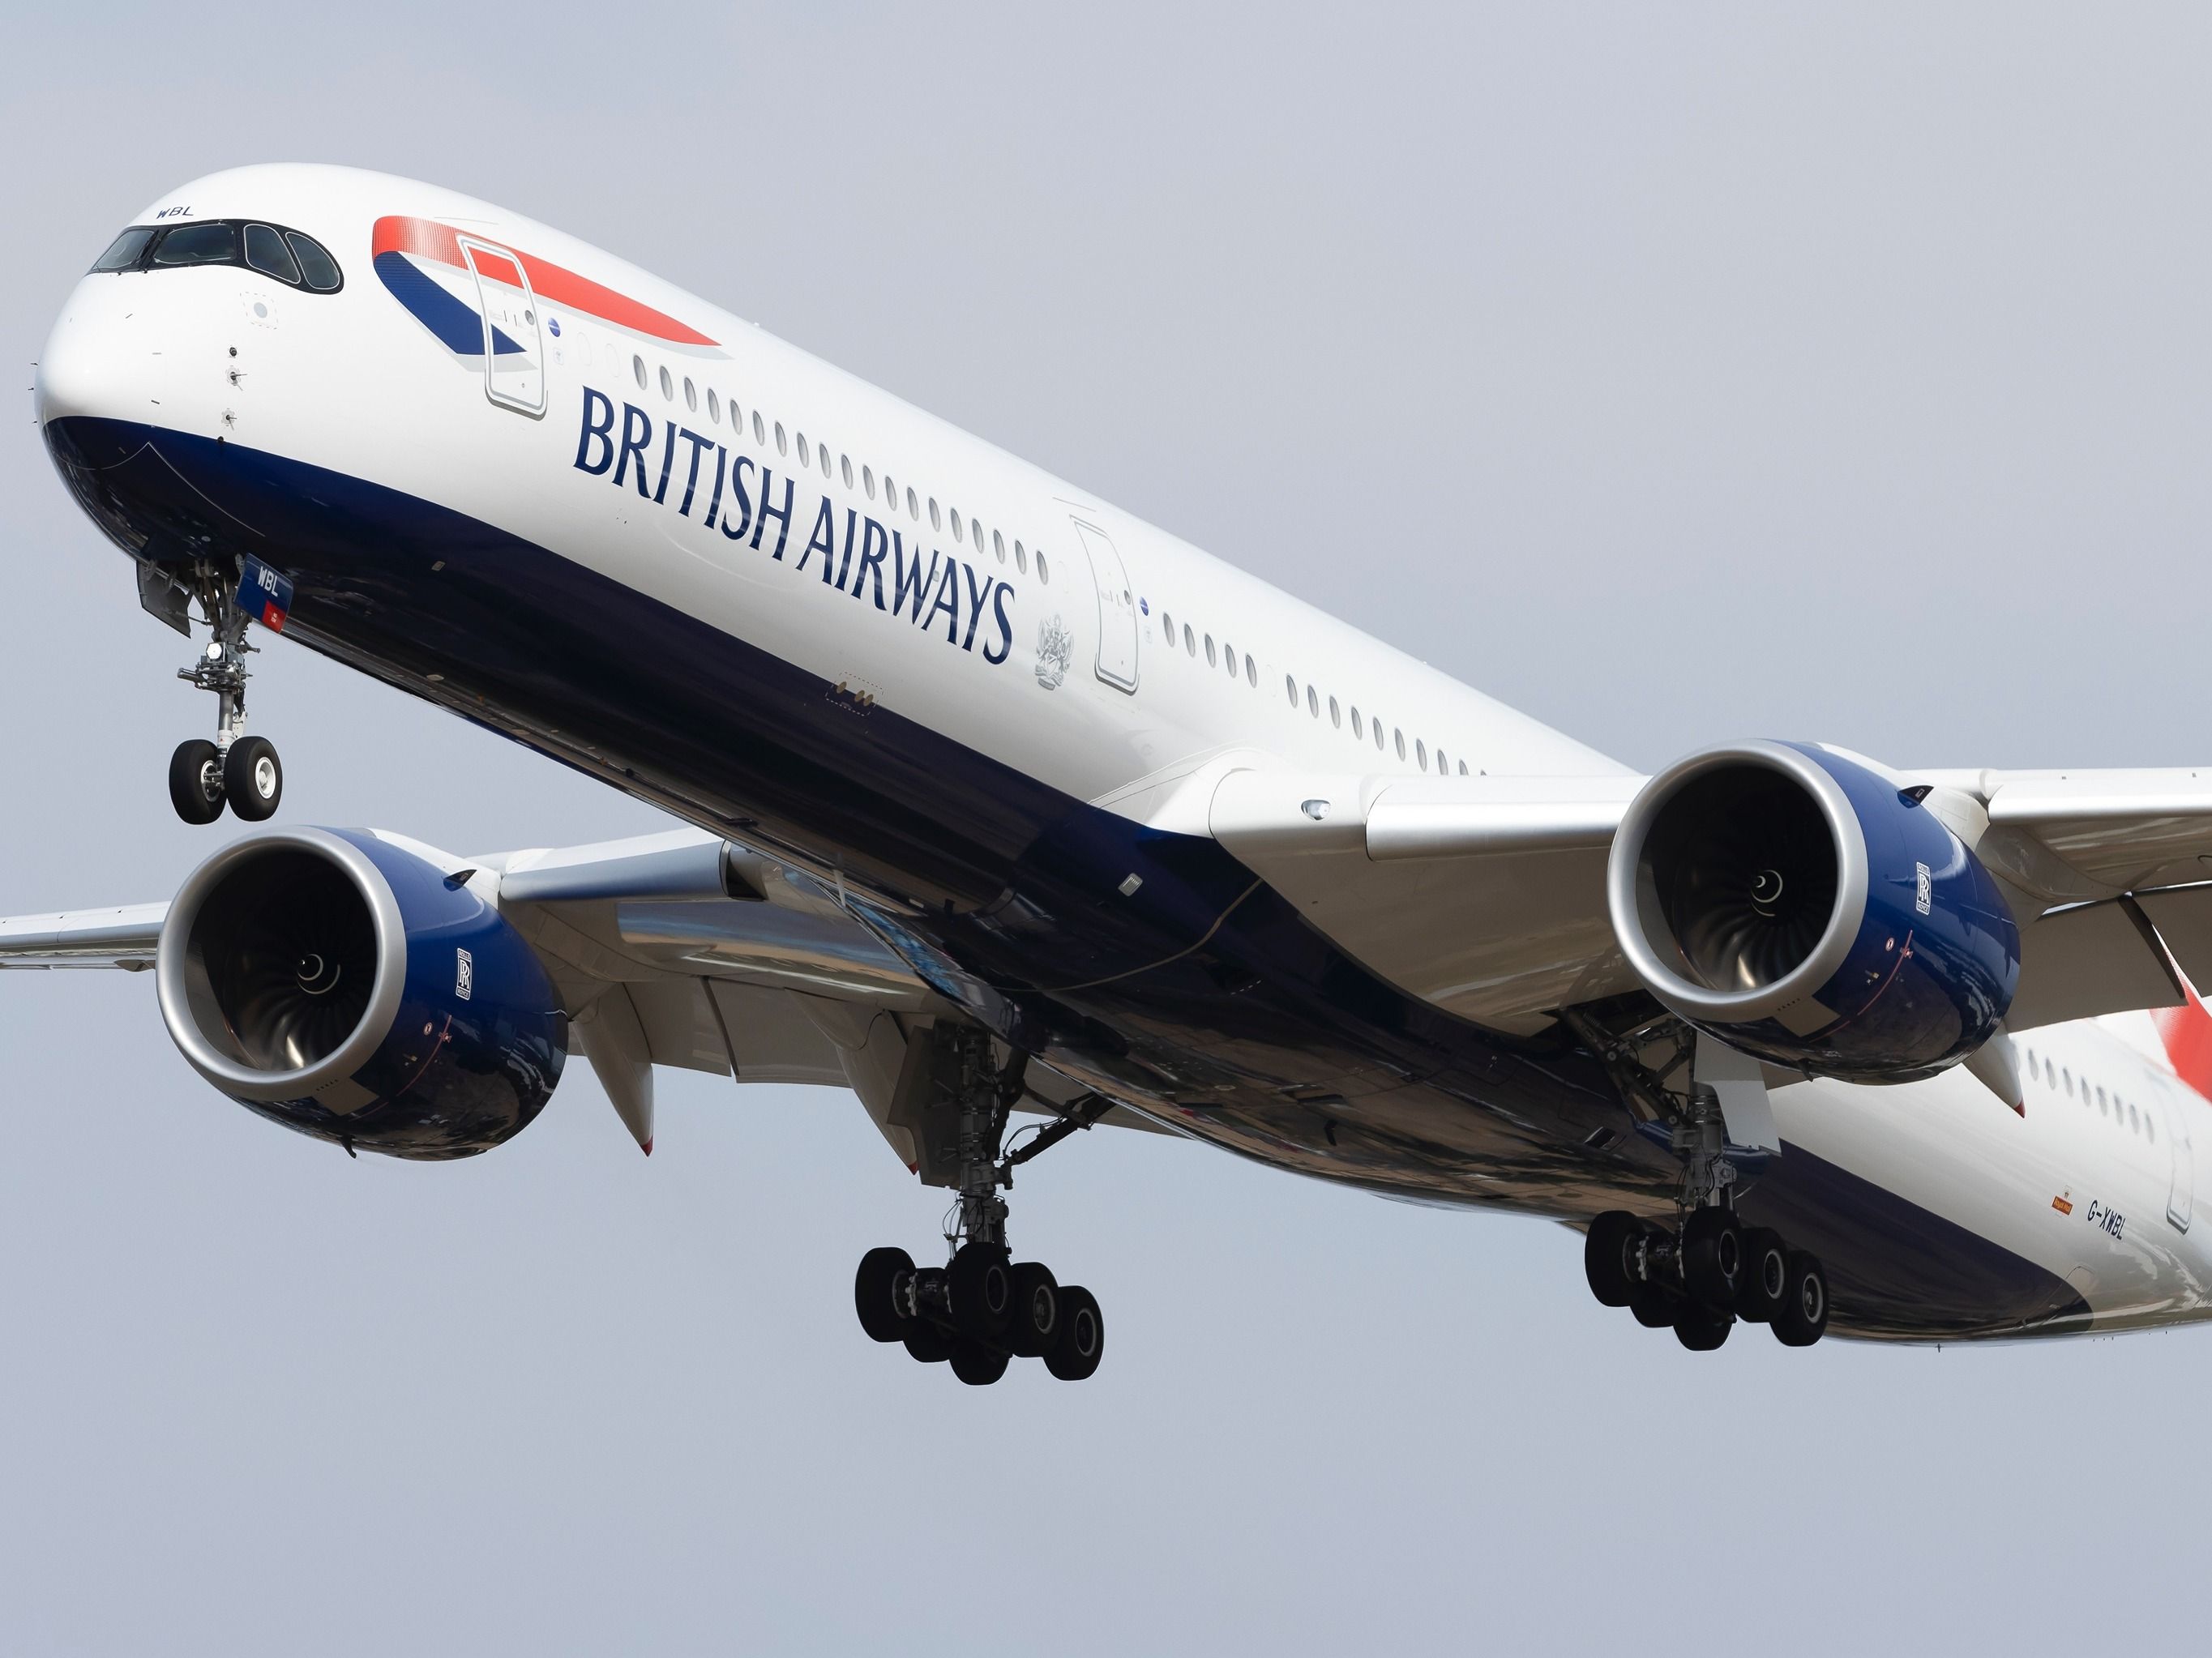 British Airways Airbus A350-1000 landing at London Heathrow Airport